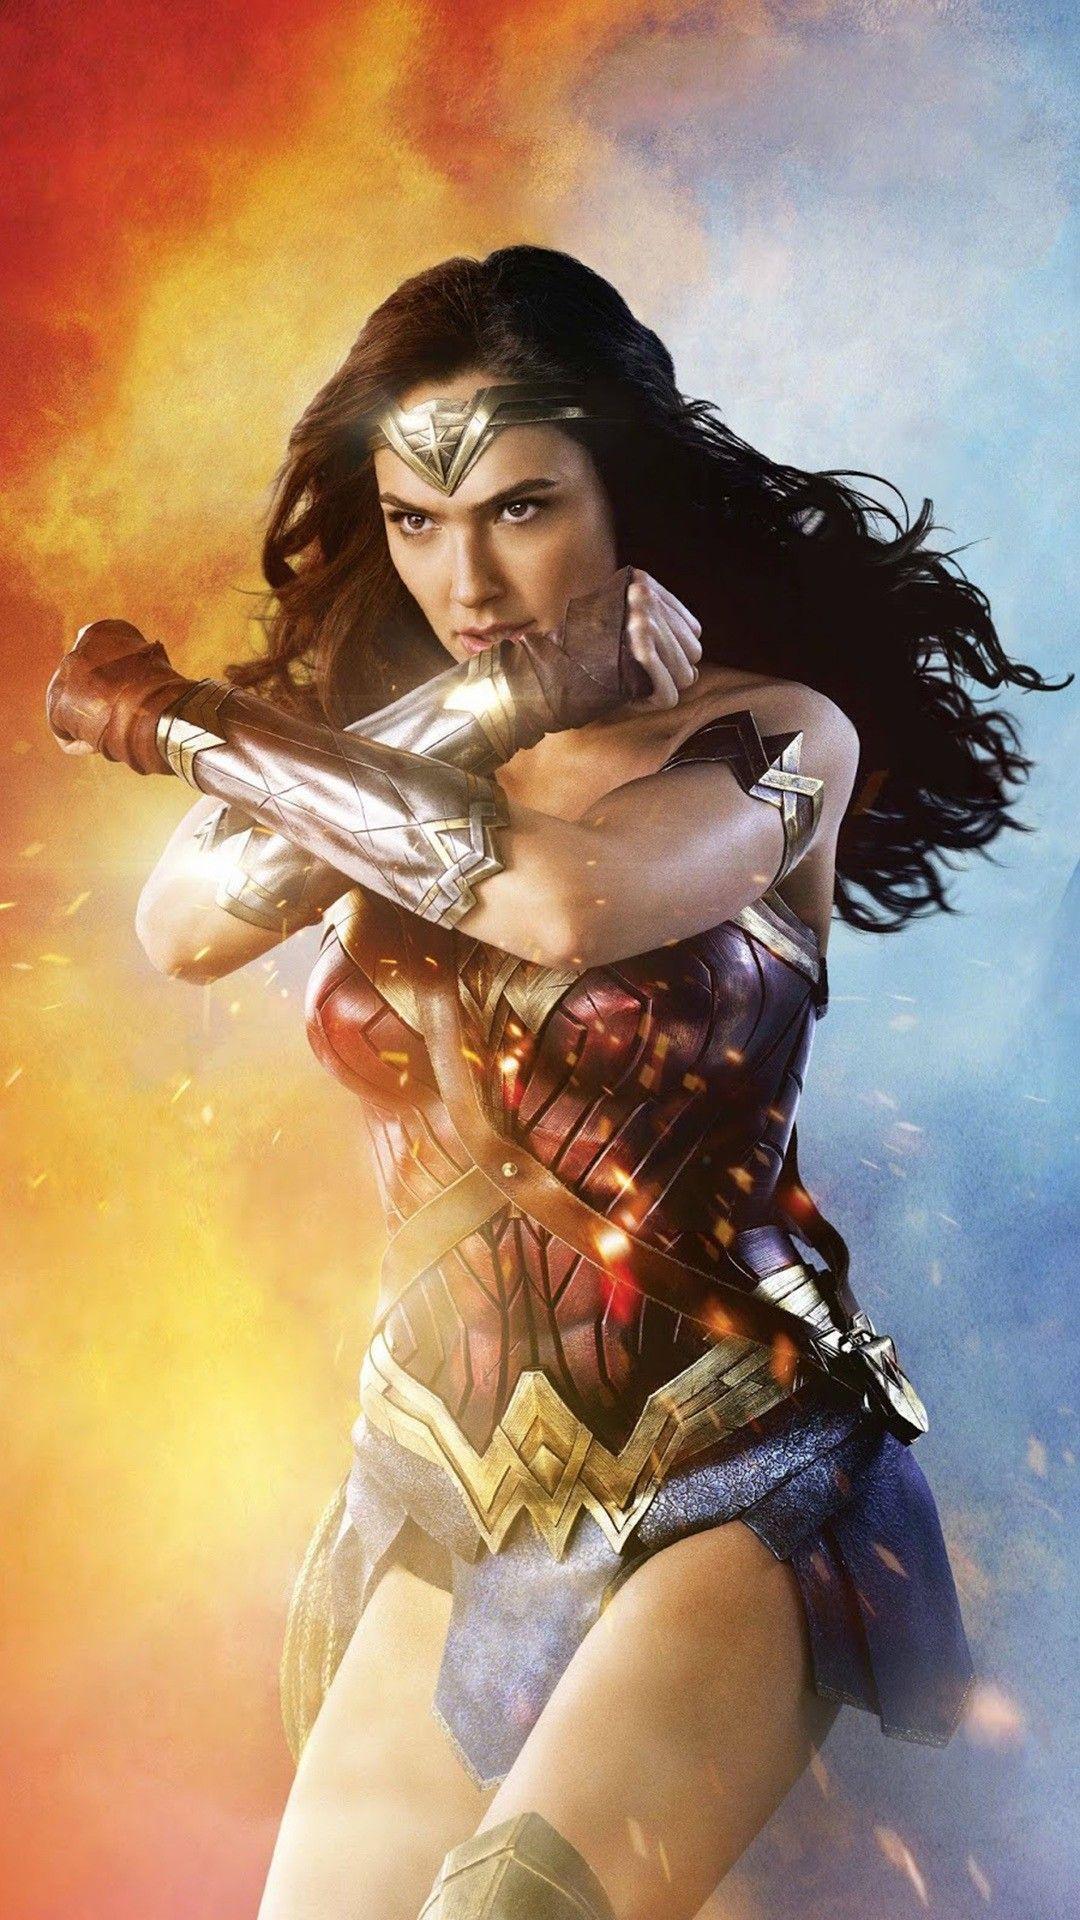 Wonder Woman Movie HD Wallpaper. Wonder woman movie, Gal gadot